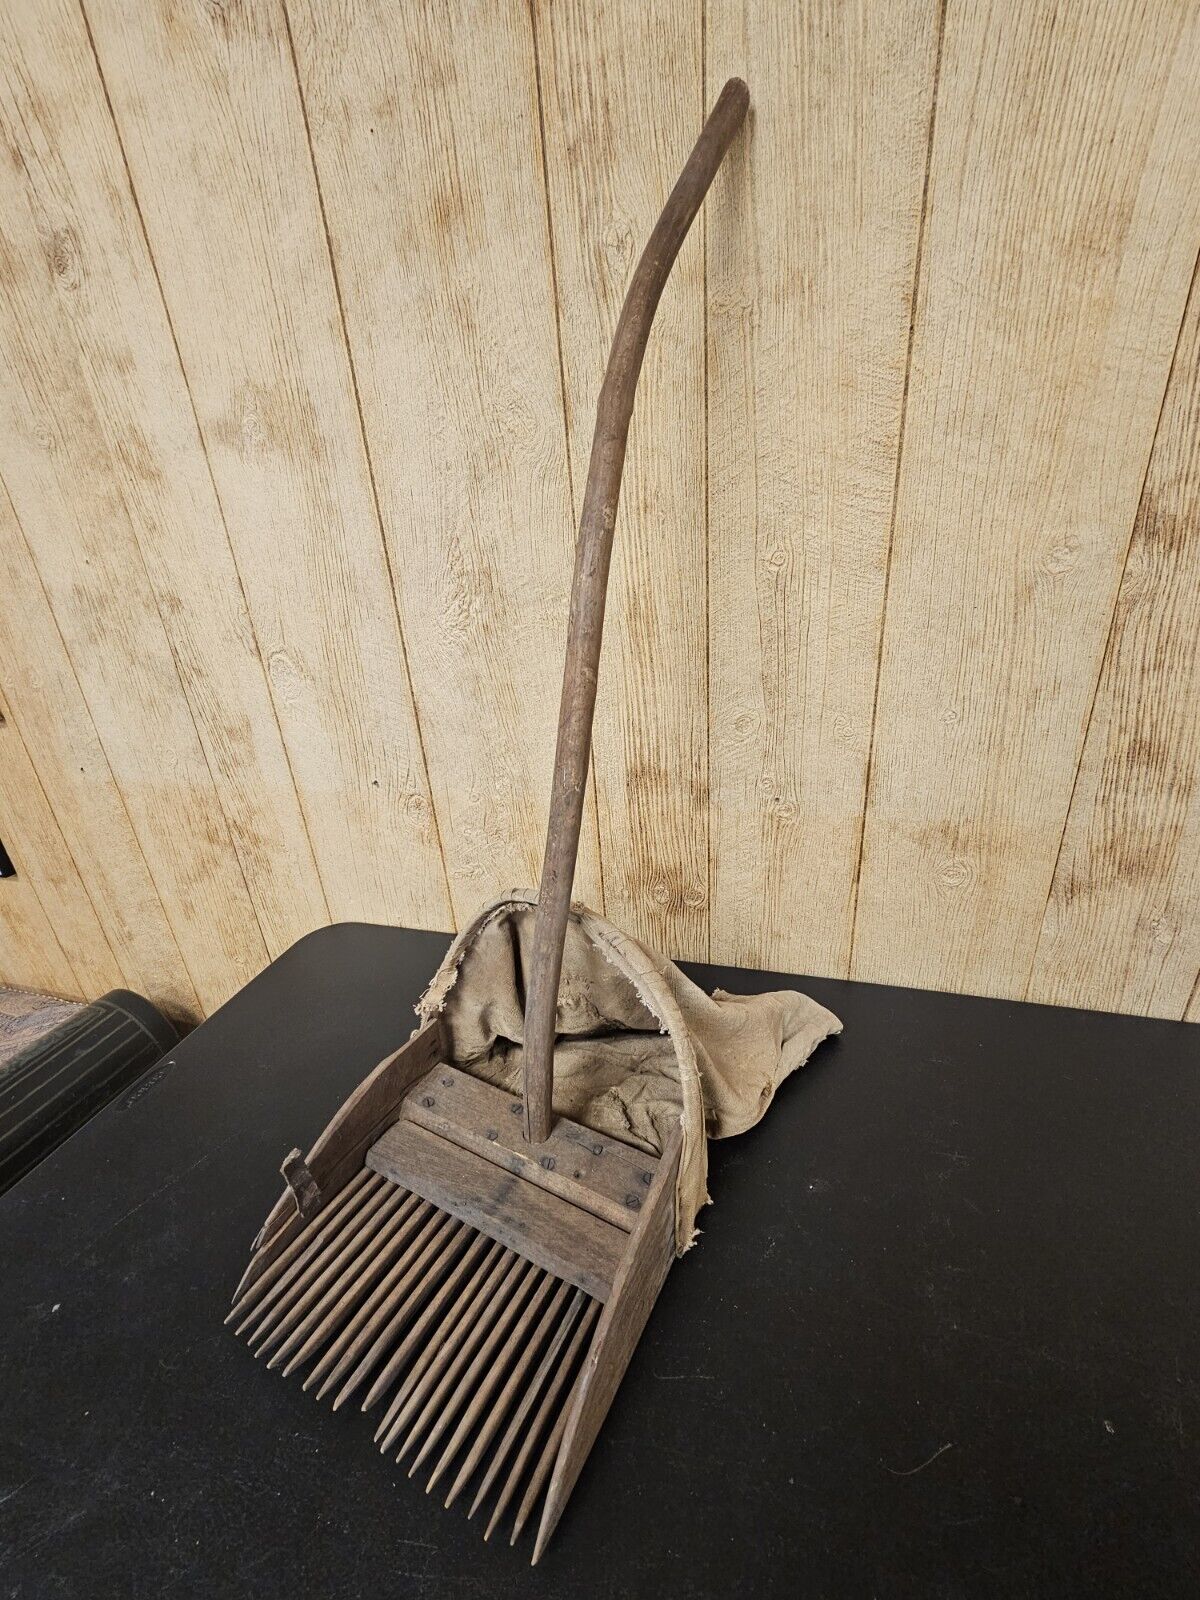 Antique Cranberry Scoop Primitive Harvesting Tool W Original Wooden Handle 